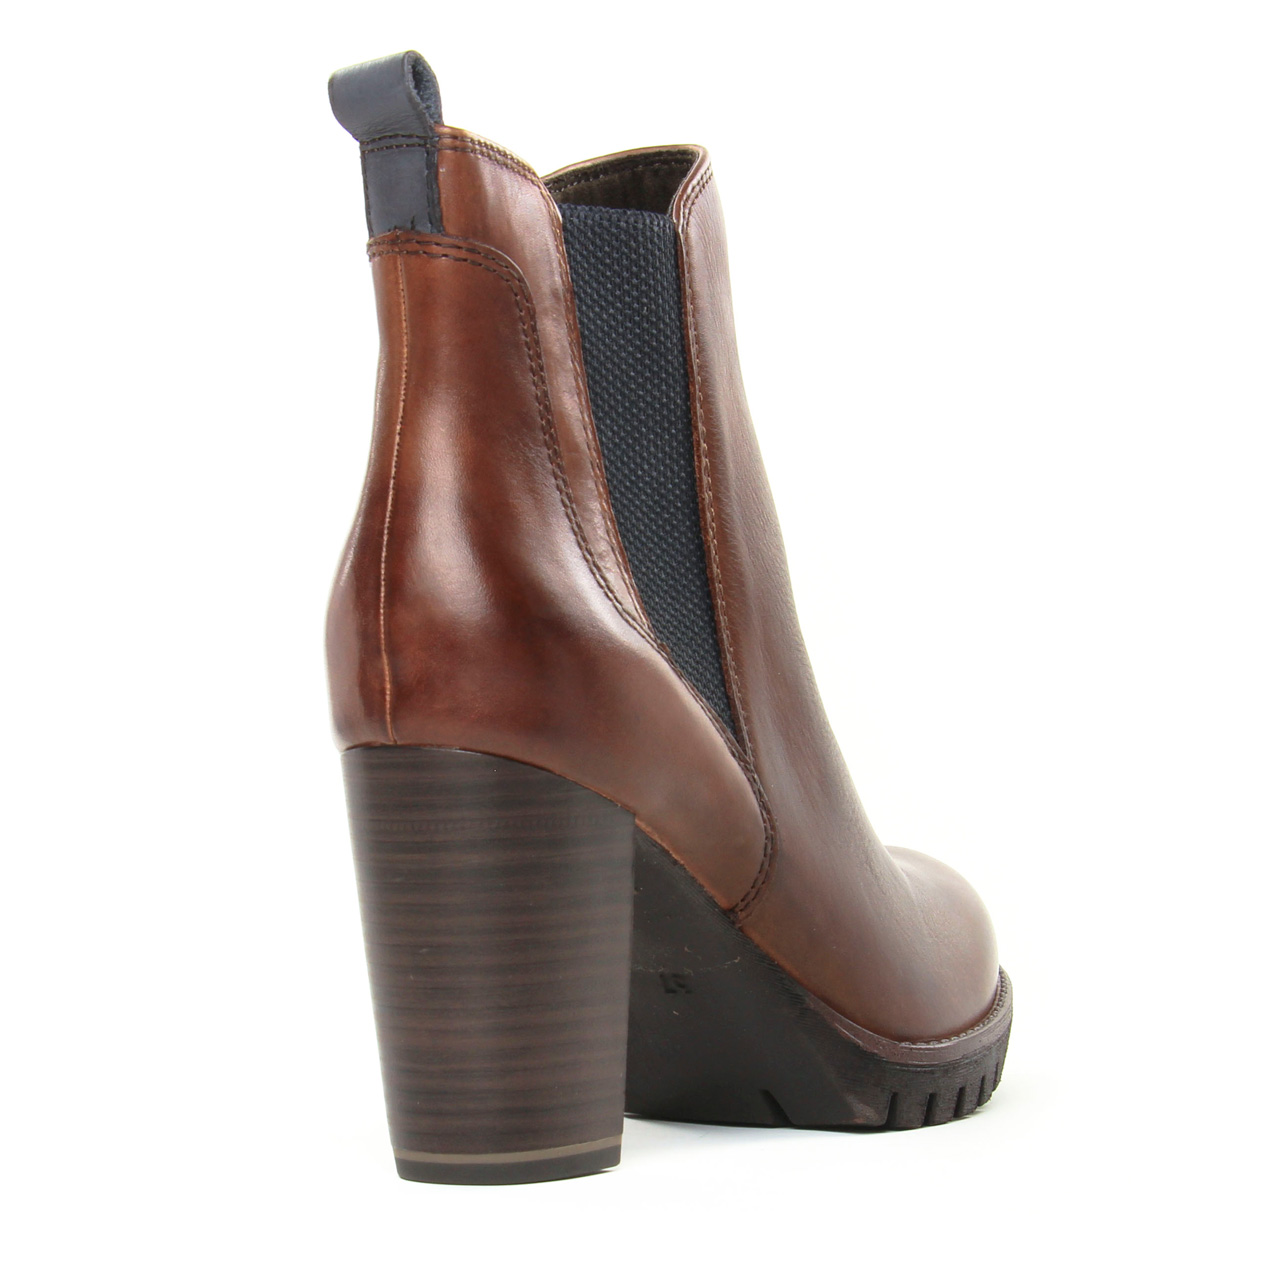 Marco Tozzi Femmes Bottines Bottes Boots hiver 2-2-25807-23/008 Noir NEUF 